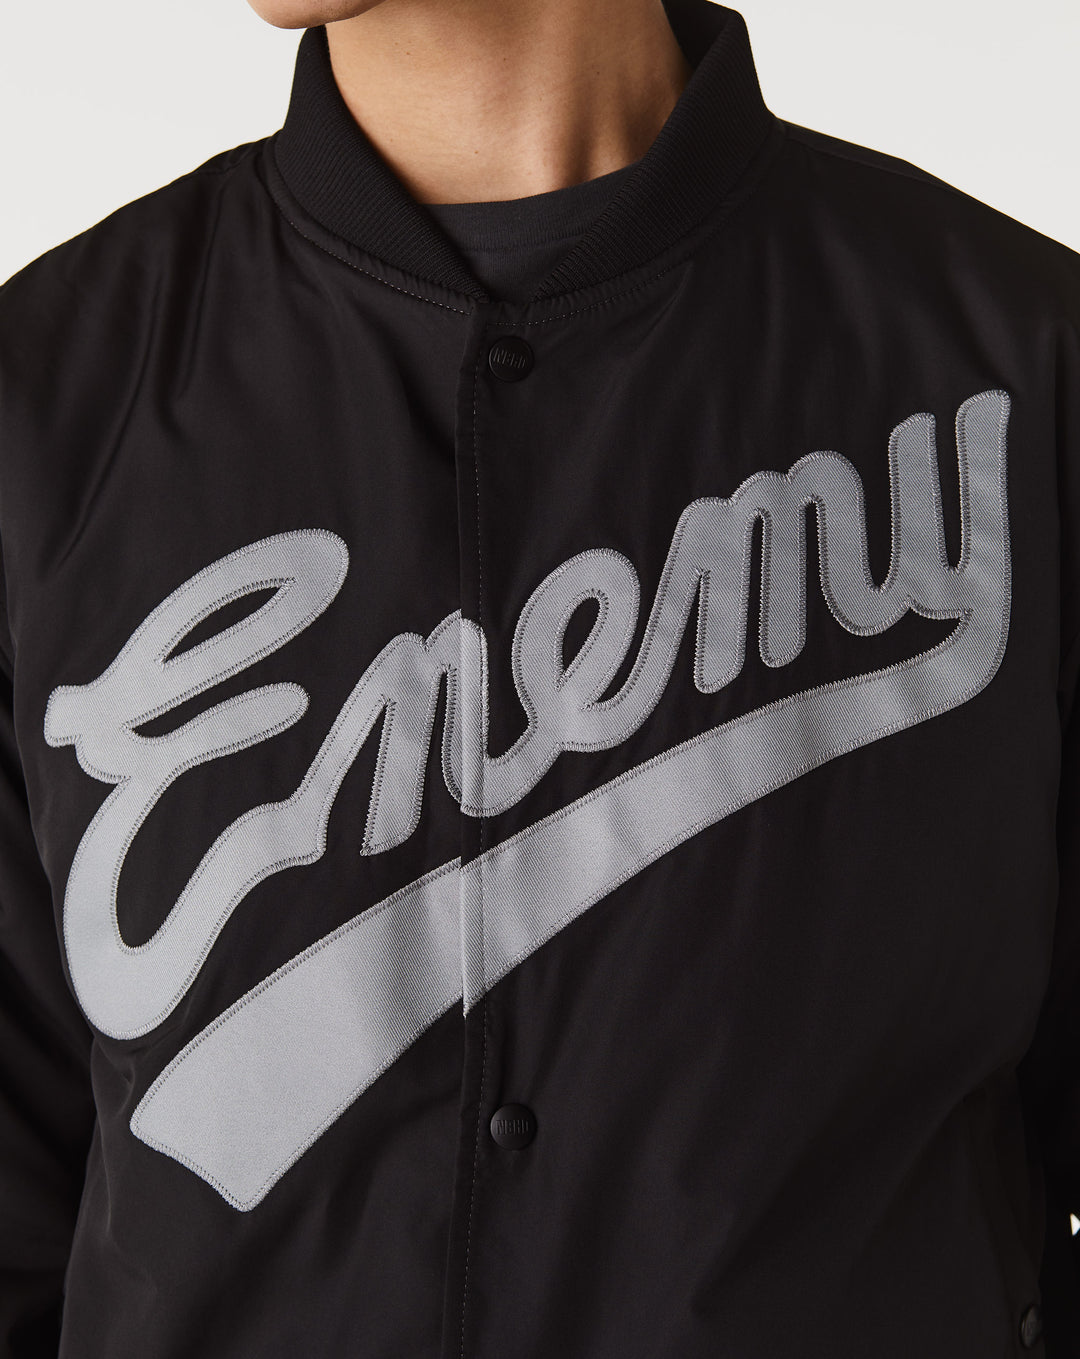 Neighborhood Public Enemy x Majestic Baseball Jacket  - XHIBITION